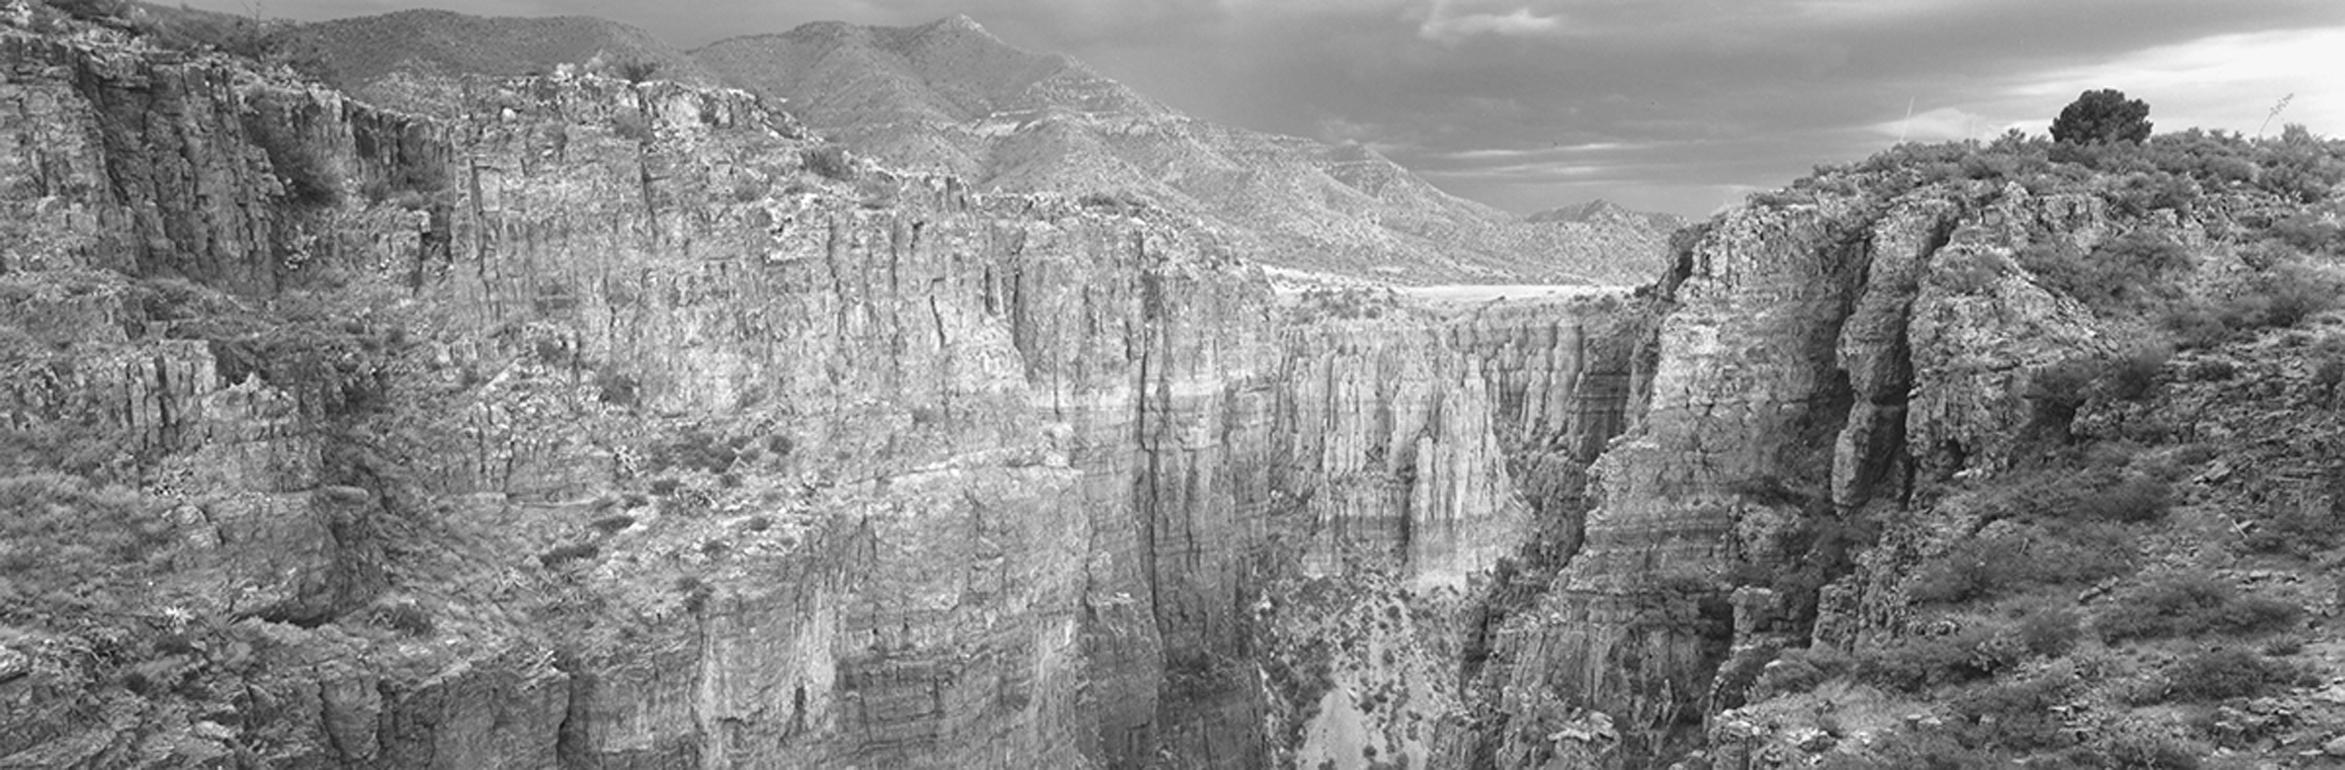 David H. Gibson Black and White Photograph - Weaver's Canyon, Arizona